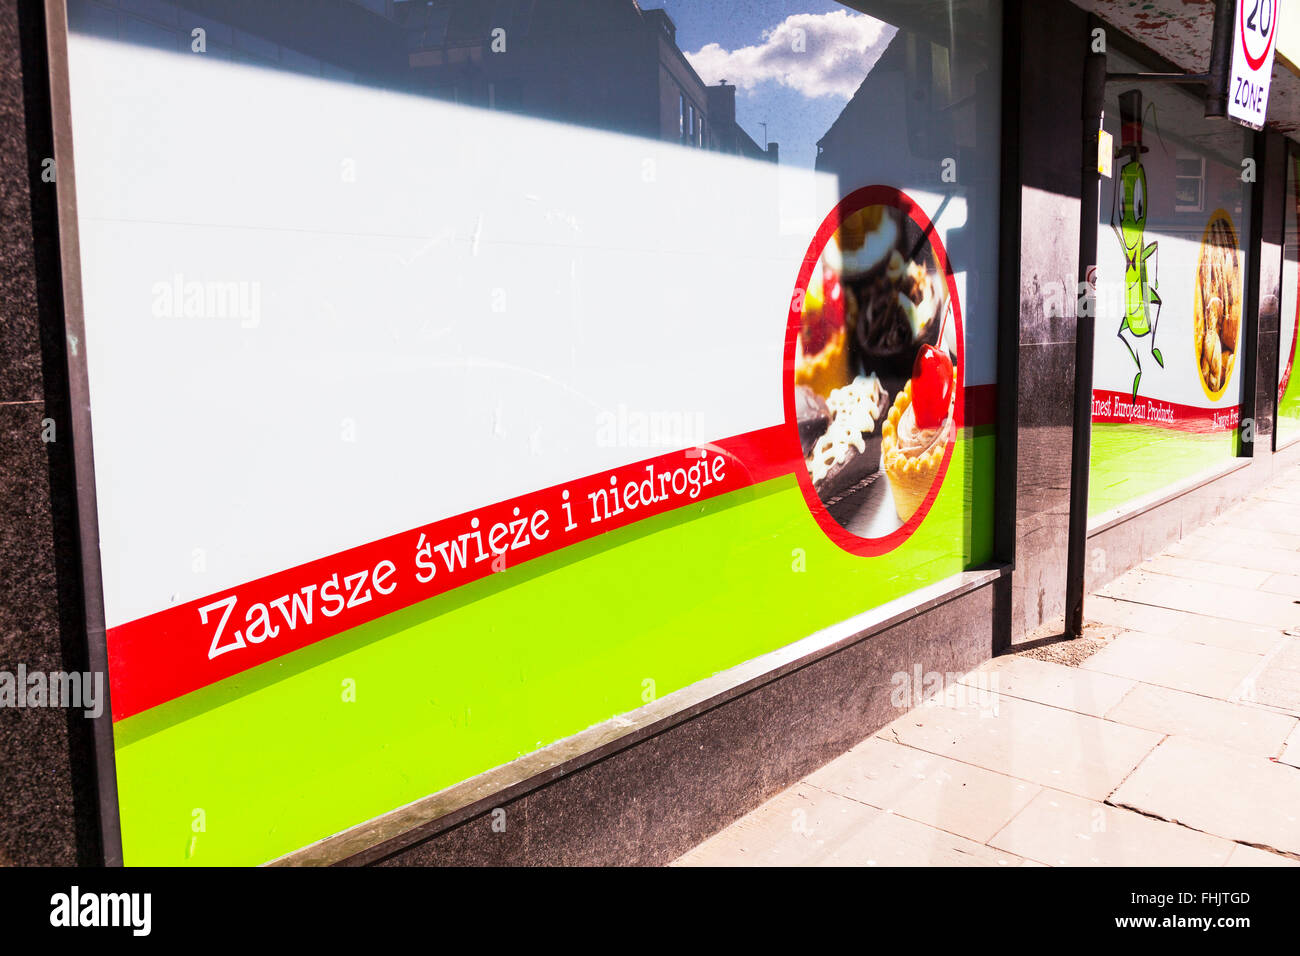 Boston Lincolnshire Polish shop store sign exterior outside UK England Stock Photo